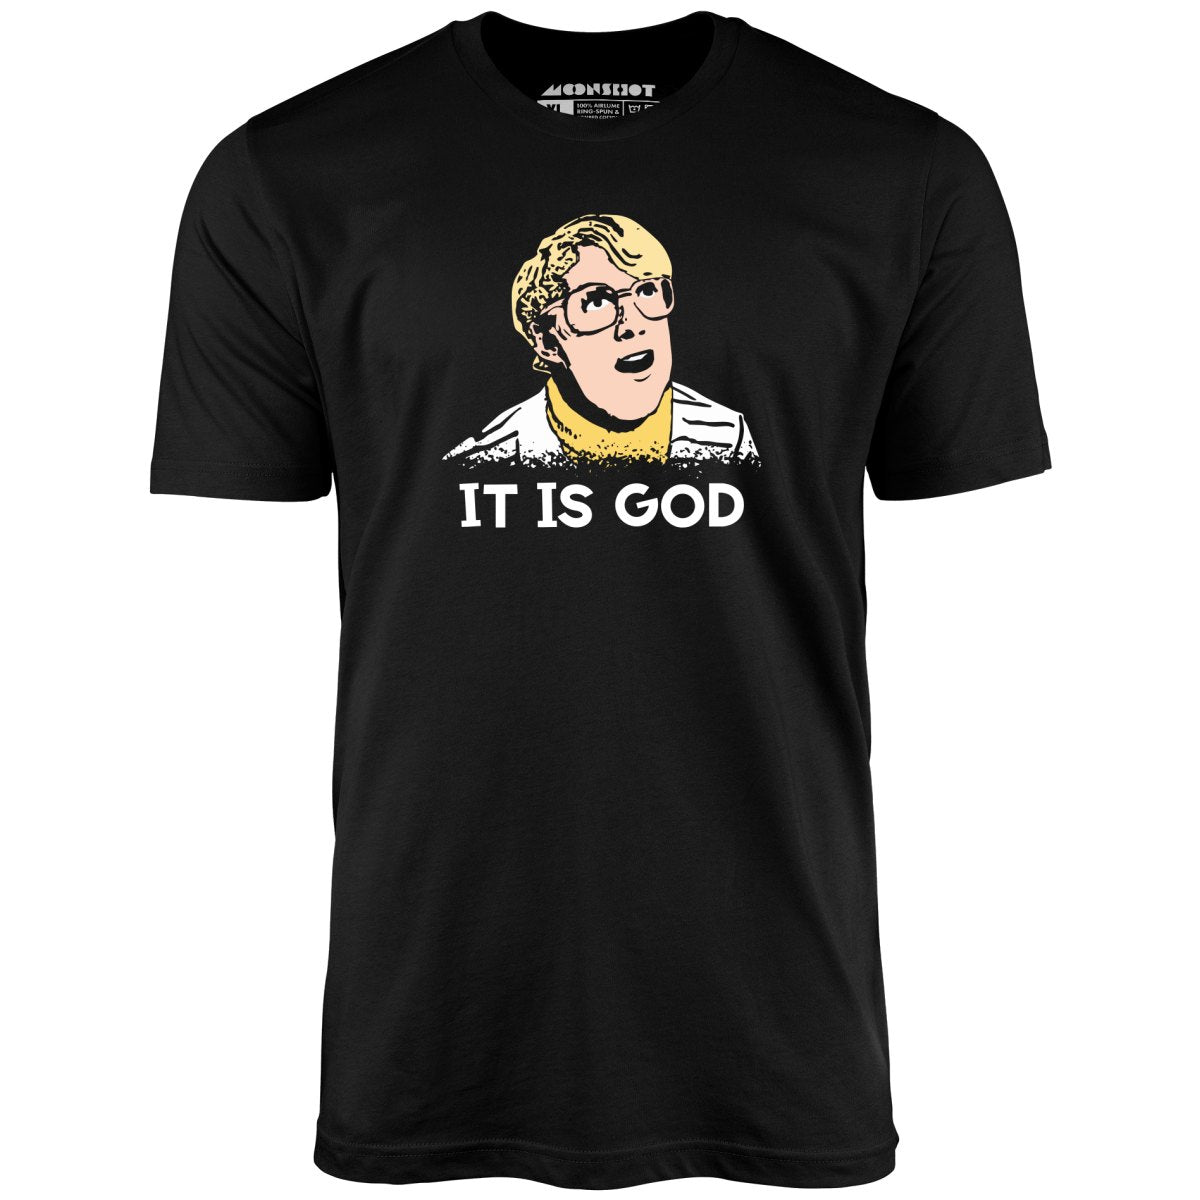 Real Genius - Kent - It is God - Unisex T-Shirt